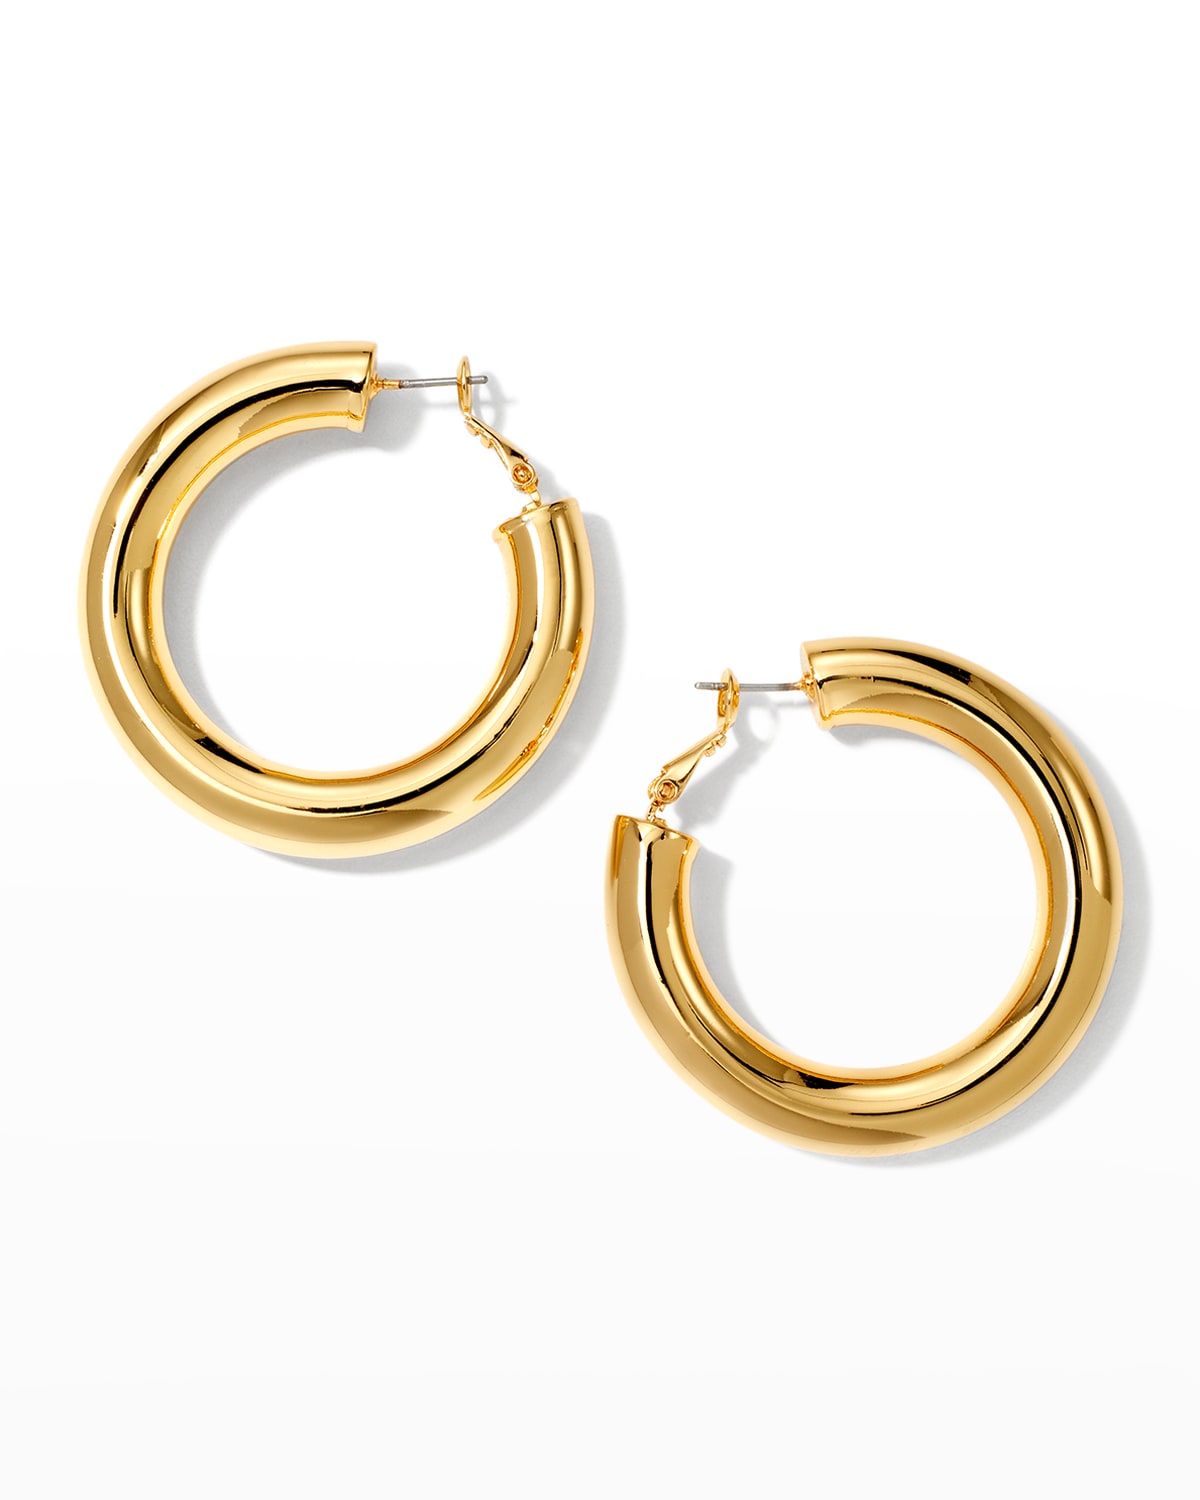 Sade Earrings, Gold